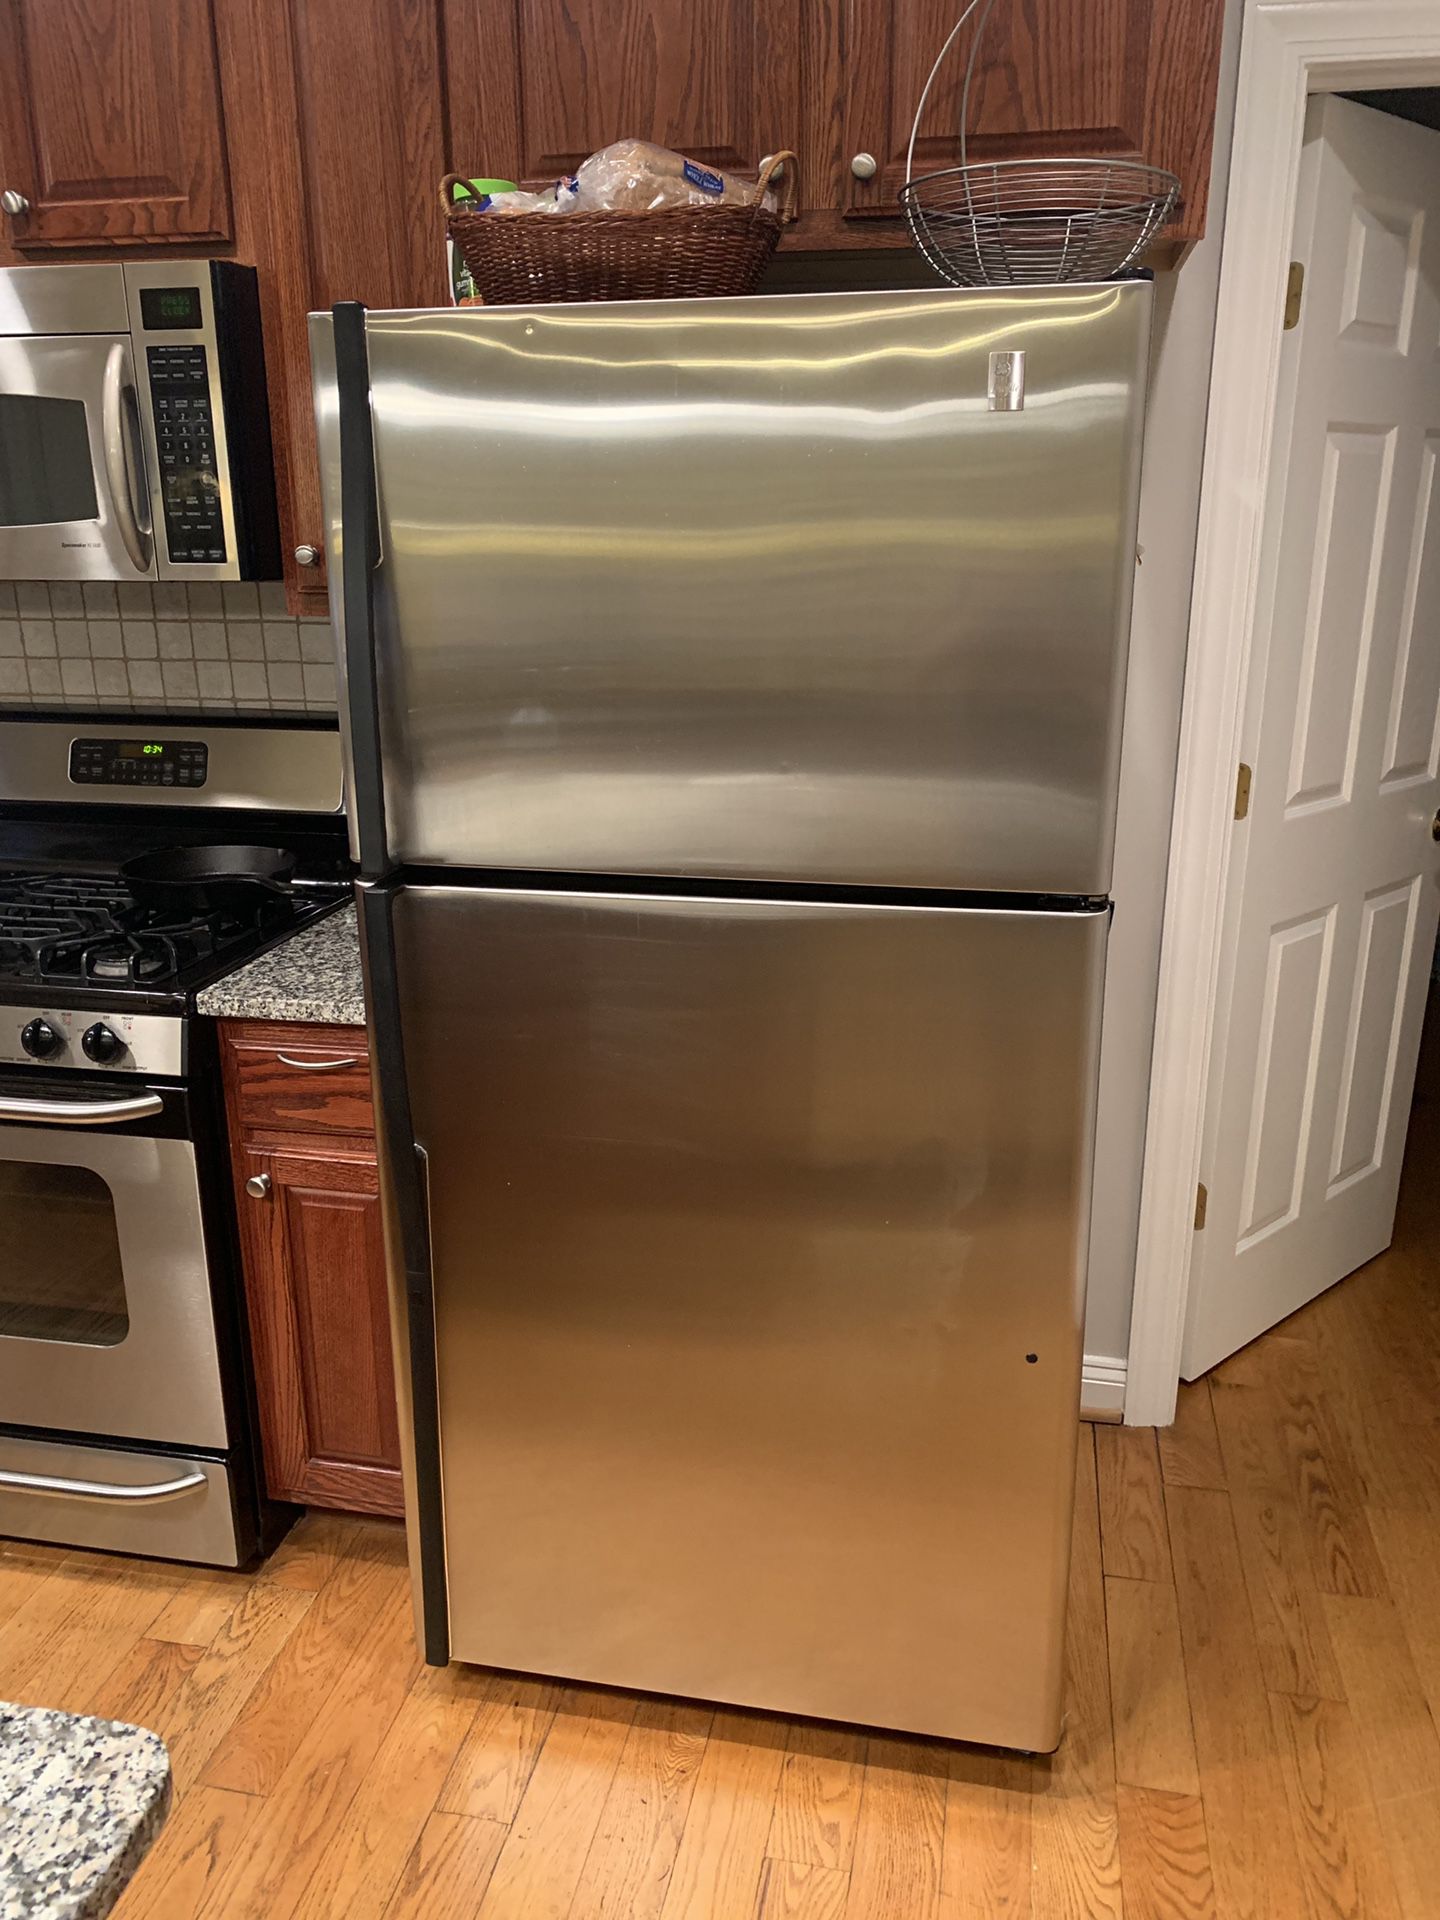 GE refrigerator excellent condition